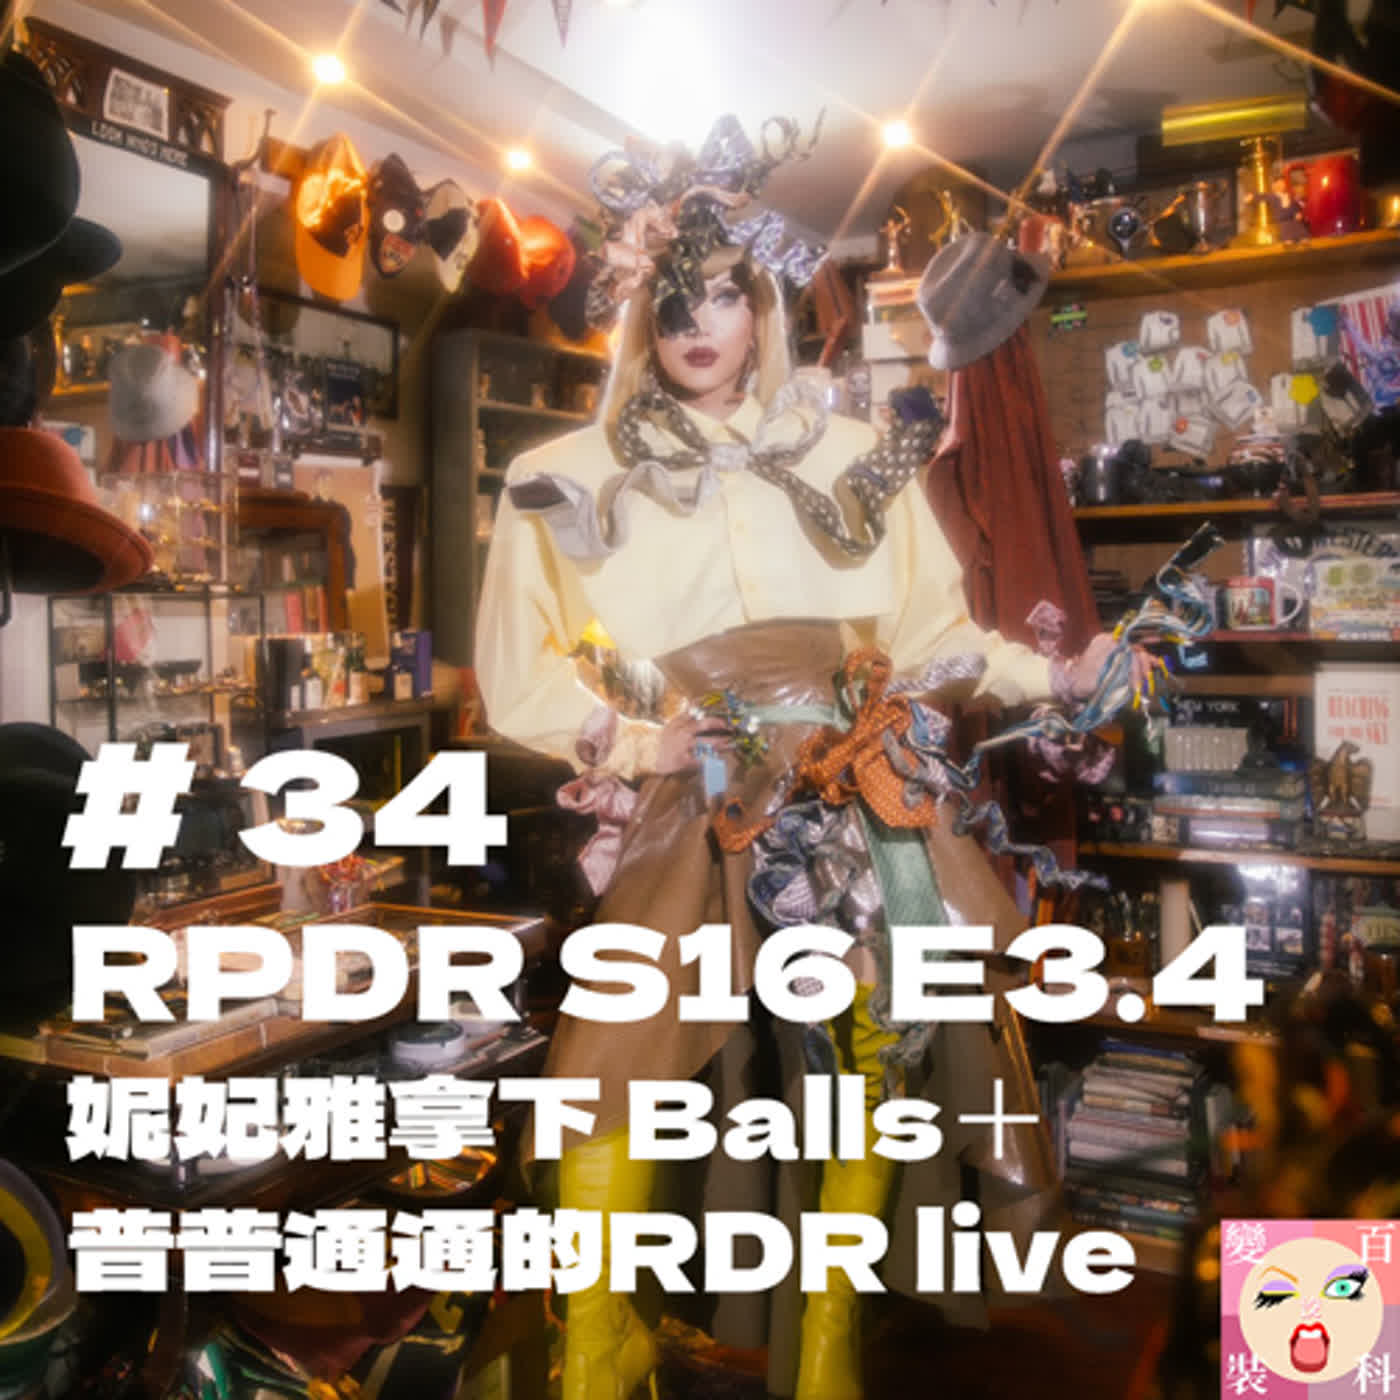 # 34  RPDR S16 E 3.4 妮妃雅拿下 Balls＋普普通通的RDR live